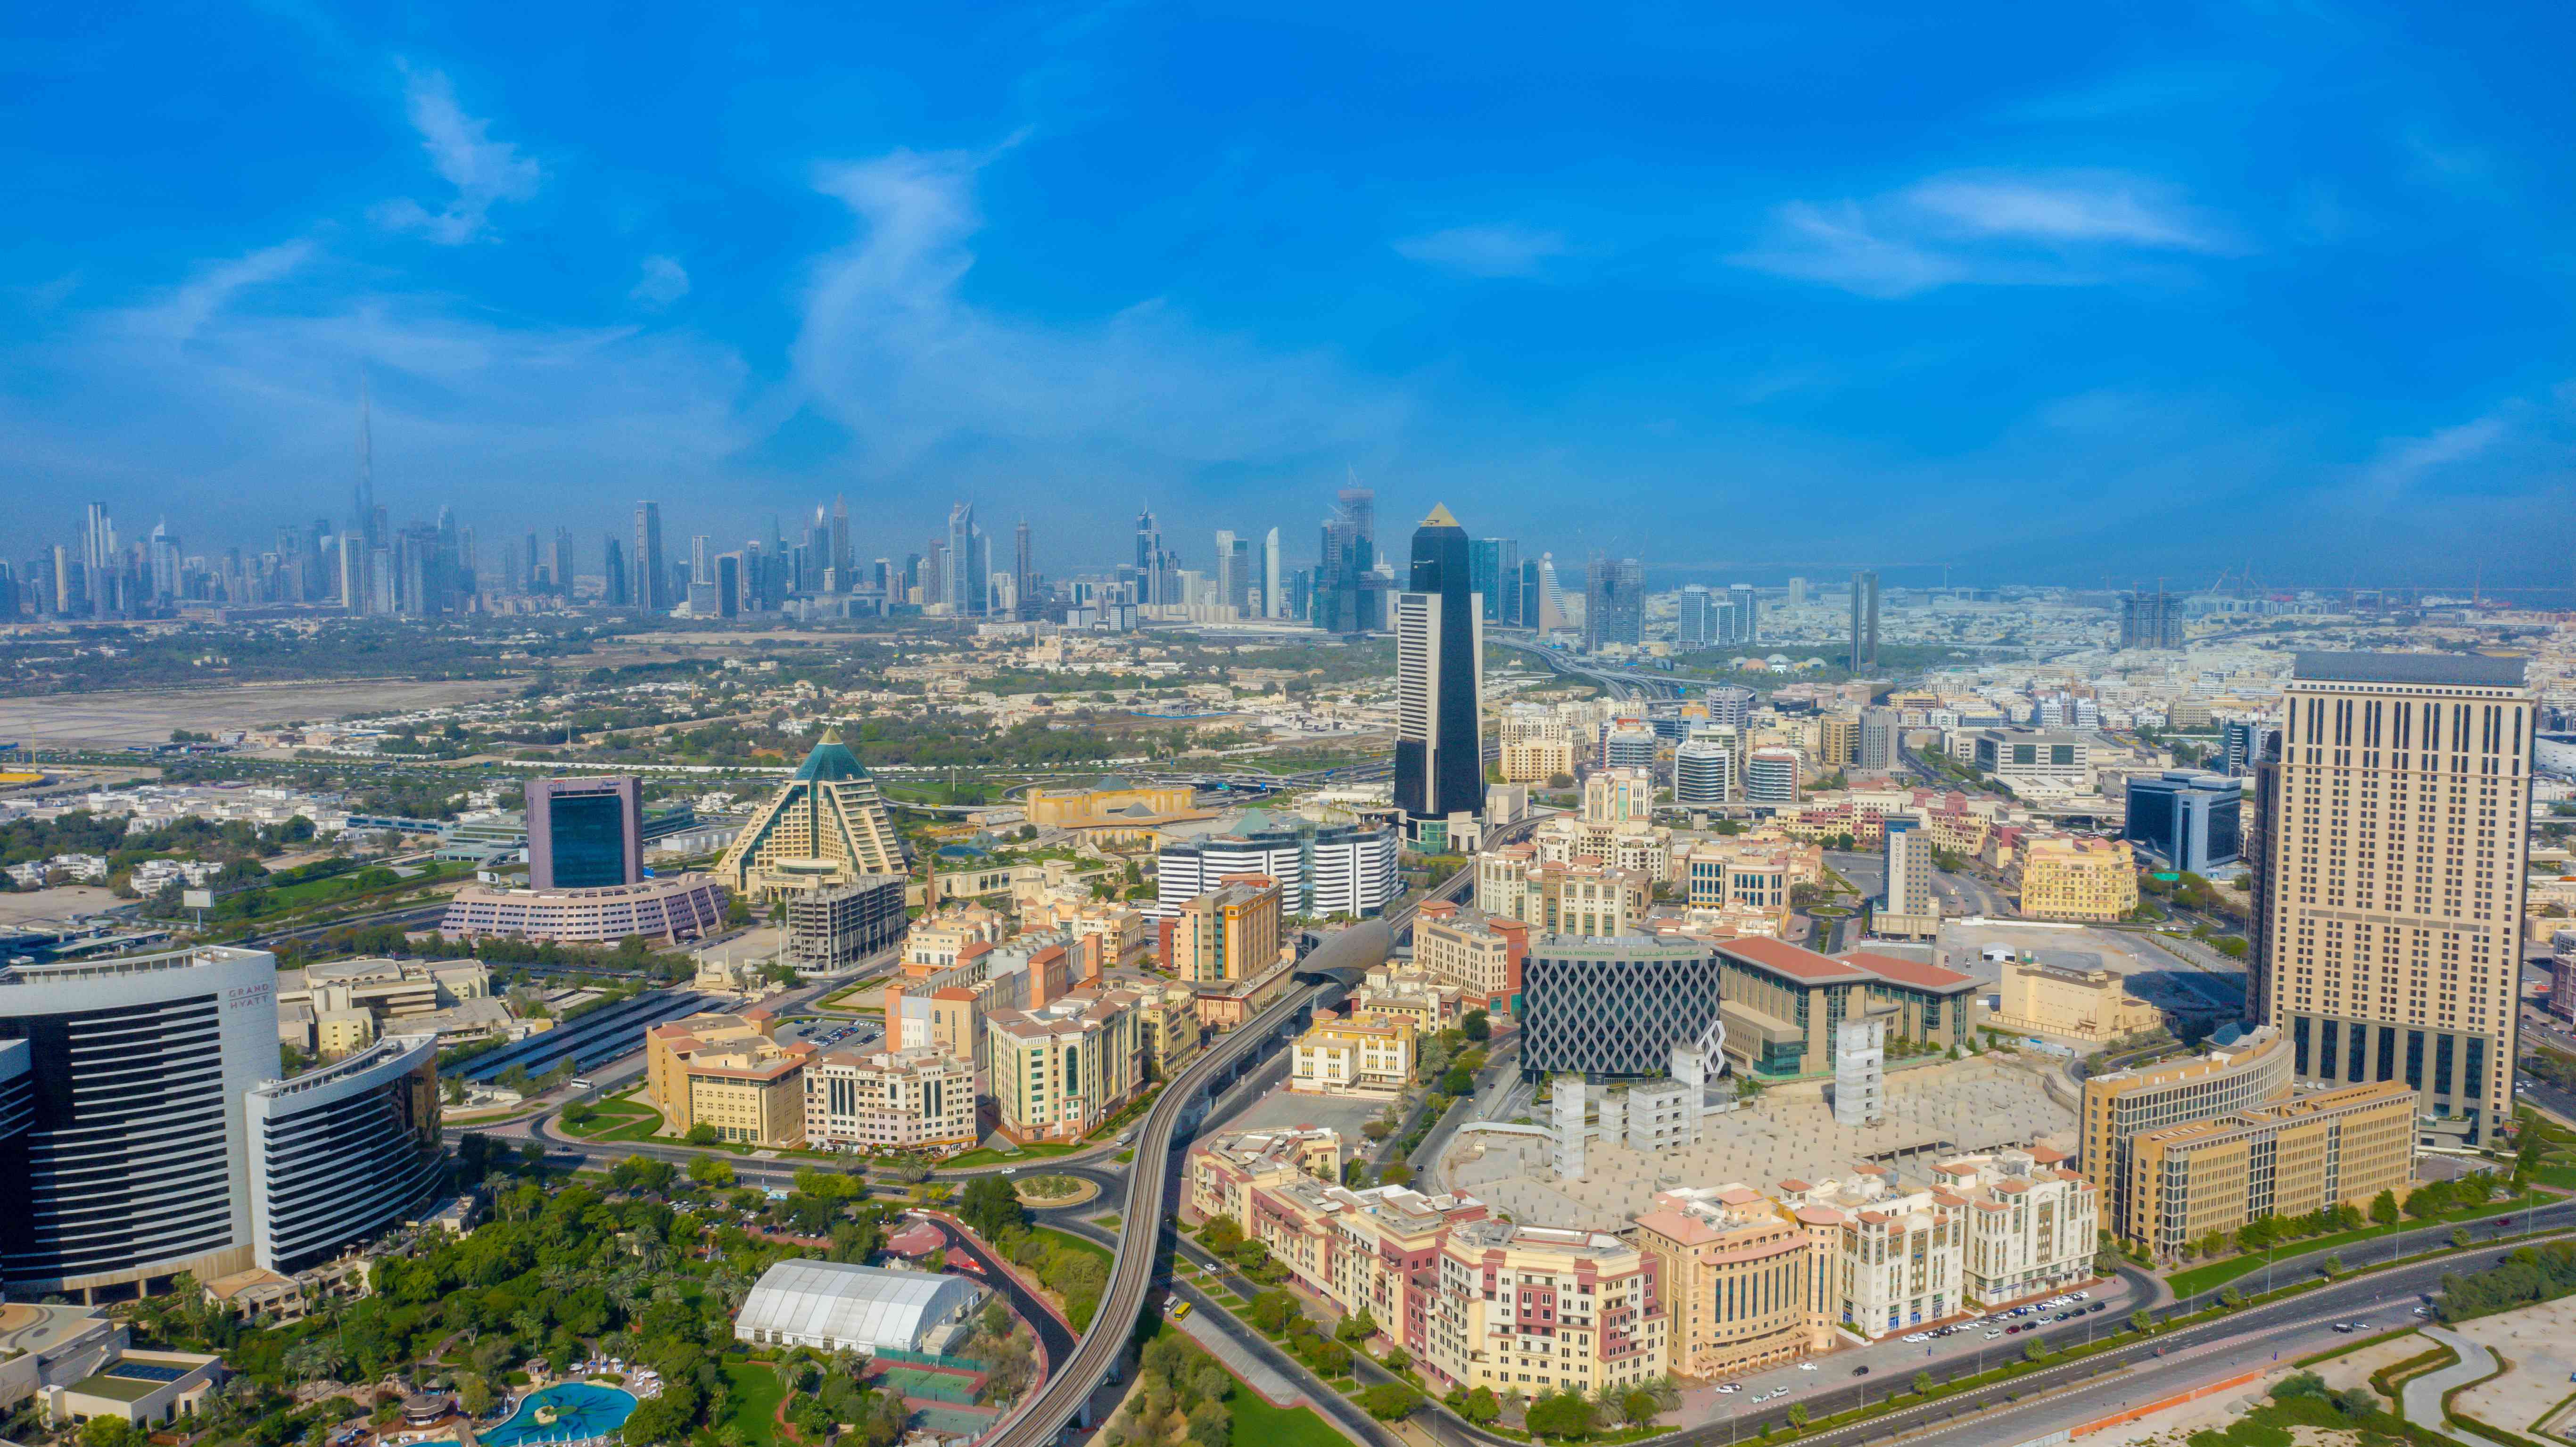 Dubai Healthcare City - The City